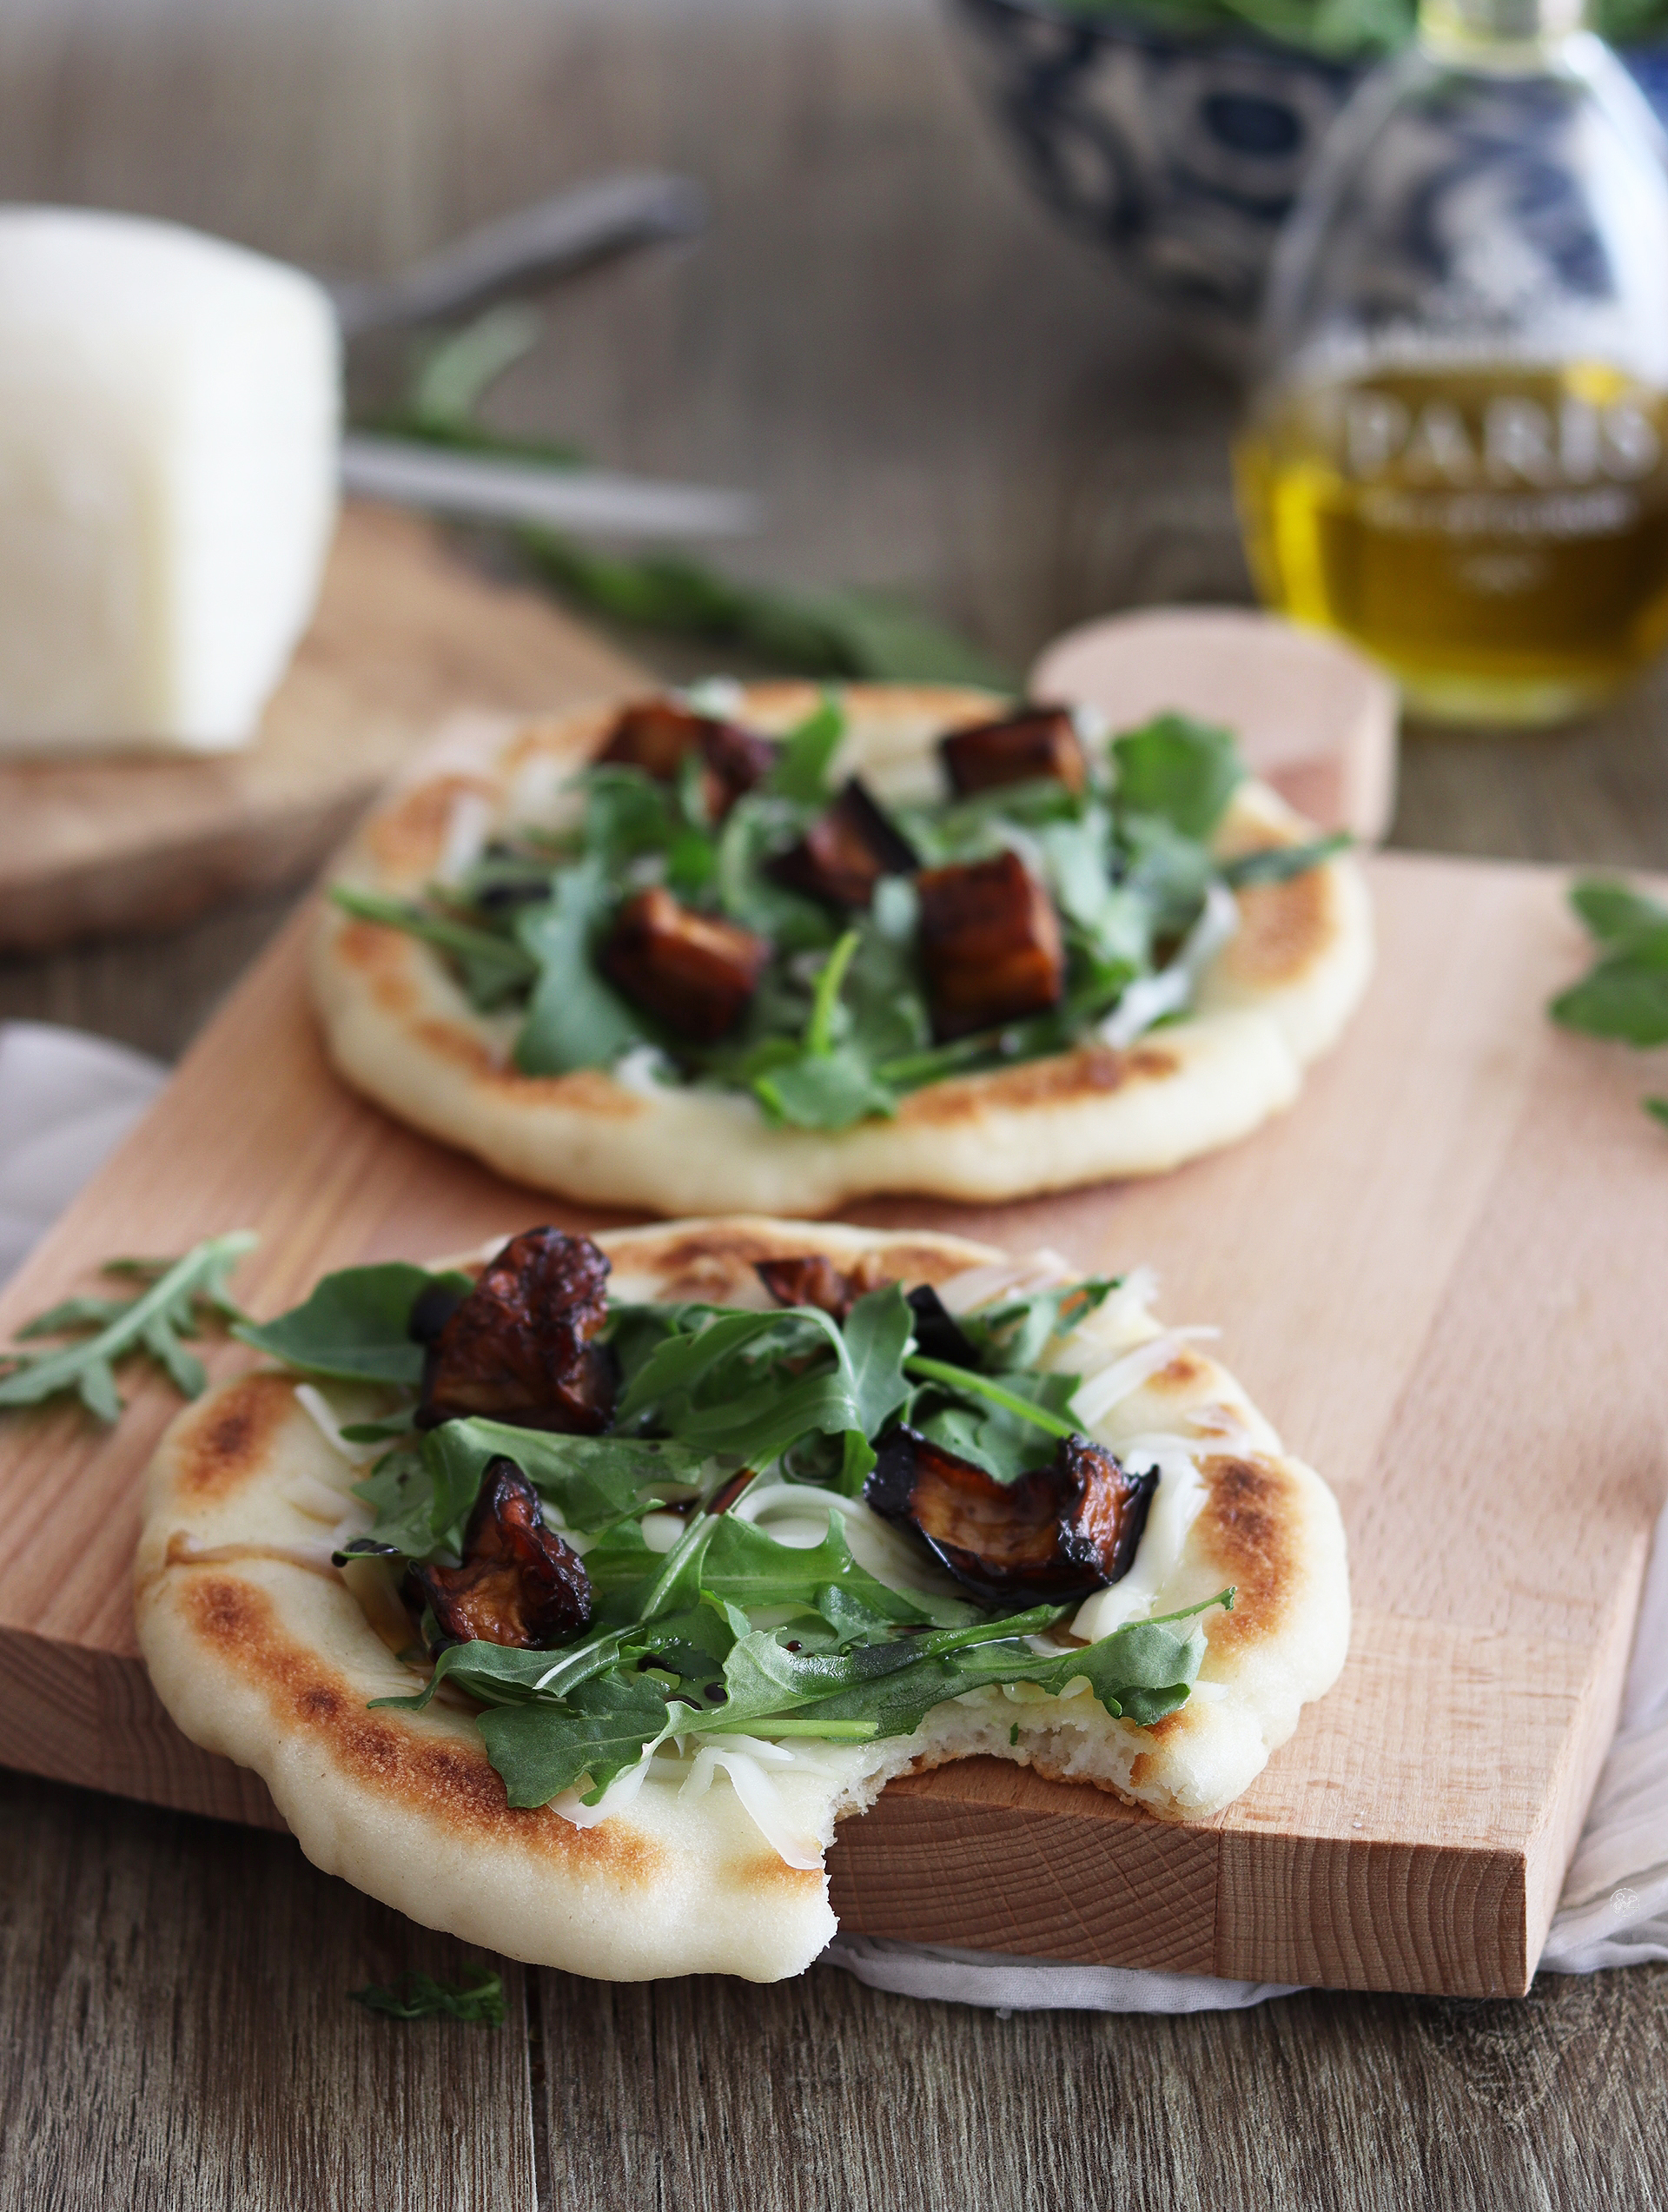 Pizzette in padella senza glutine e senza mix industriali - La Cassata Celiaca